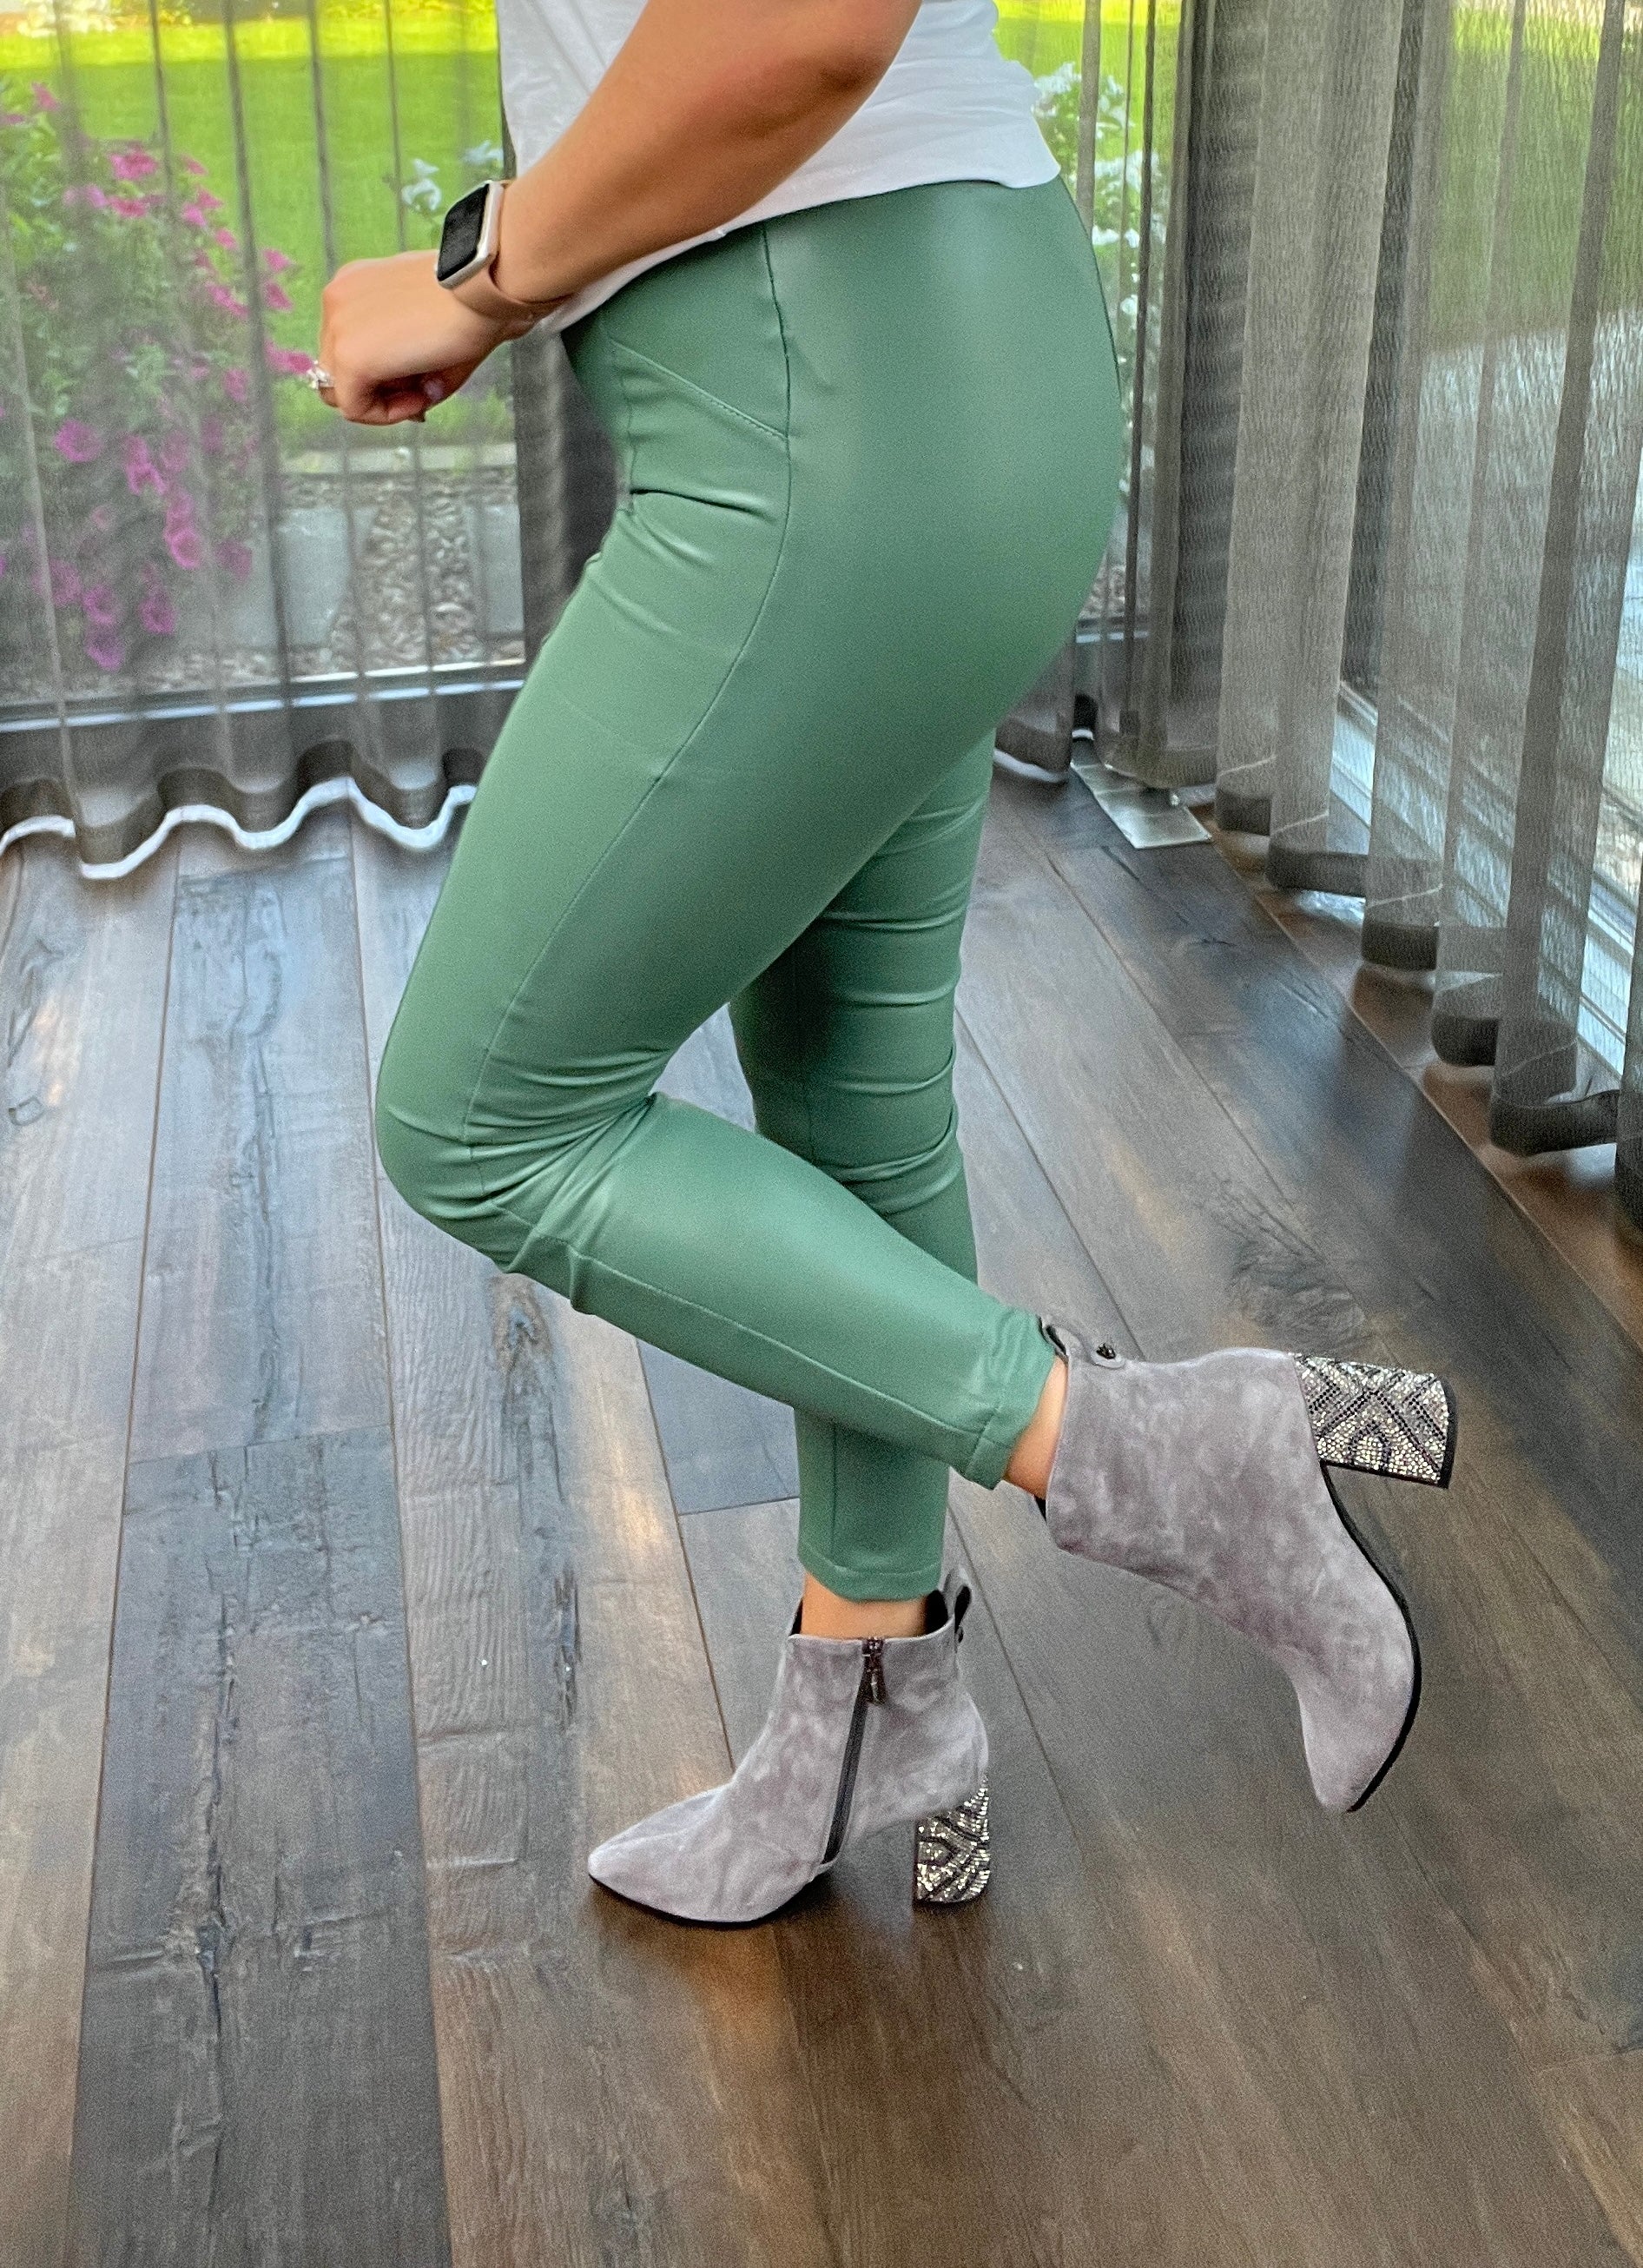 Women's Green Leather & Faux Leather Pants & Leggings